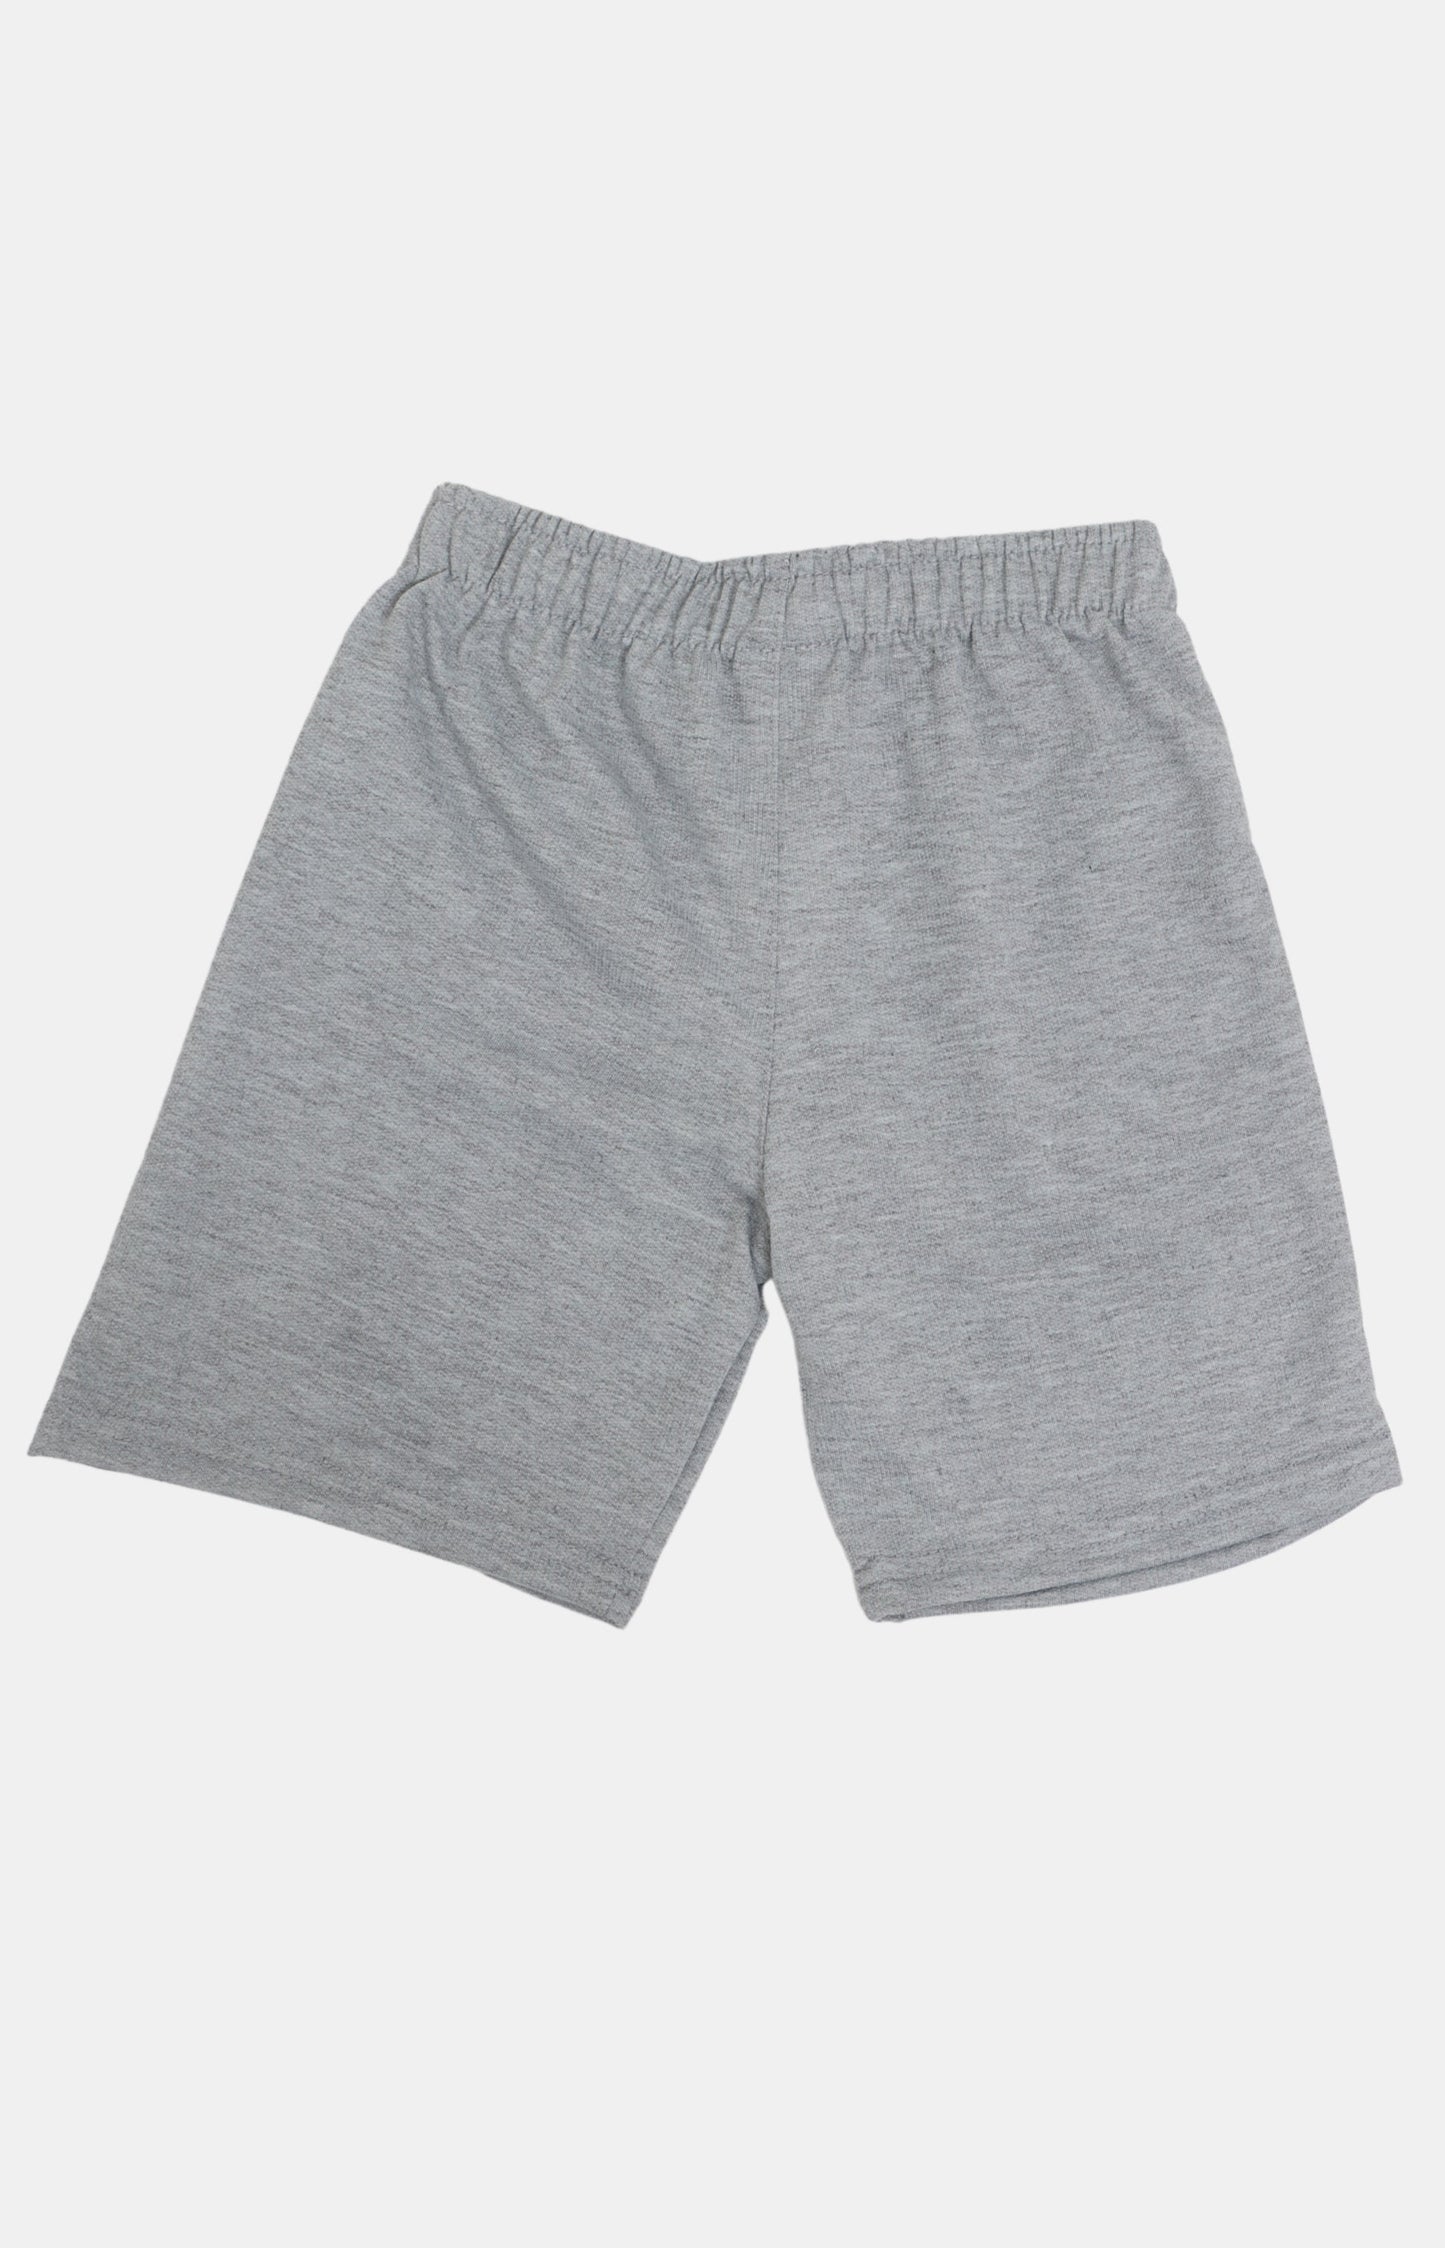 Pre-Boys Shorts - Grey